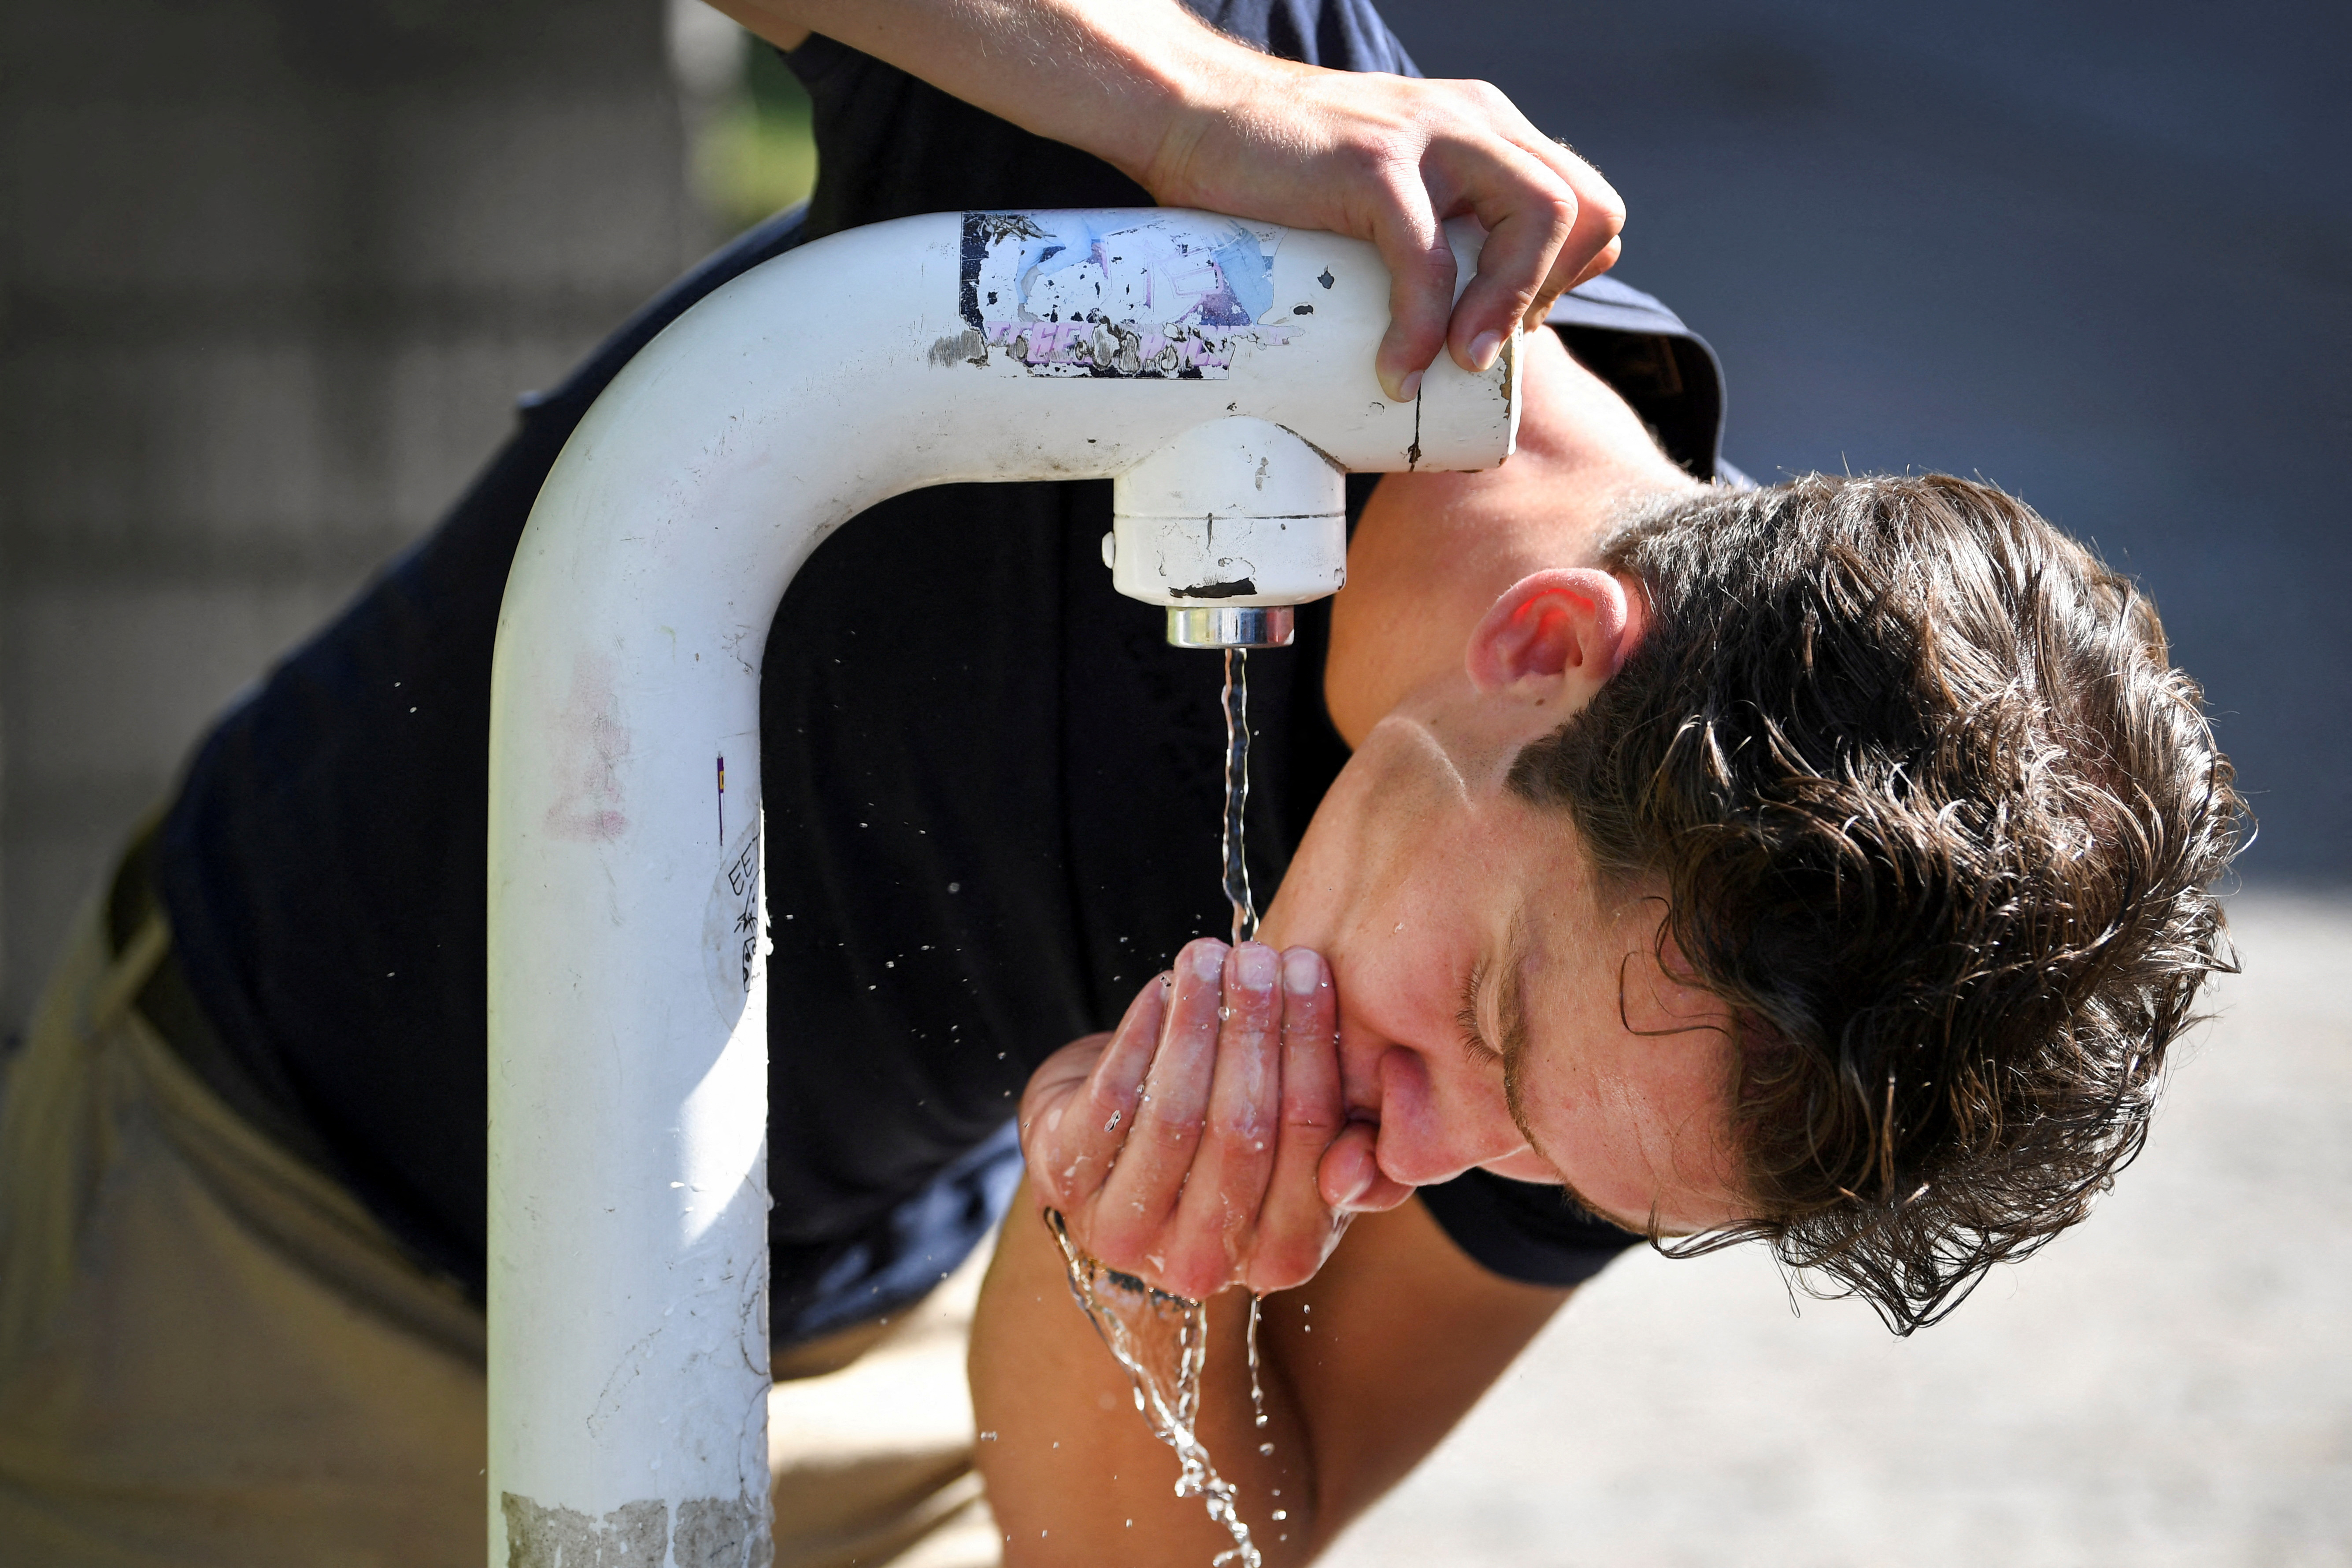 A man drinks water from a public drinking establishment during a heatwave in Nijmegen